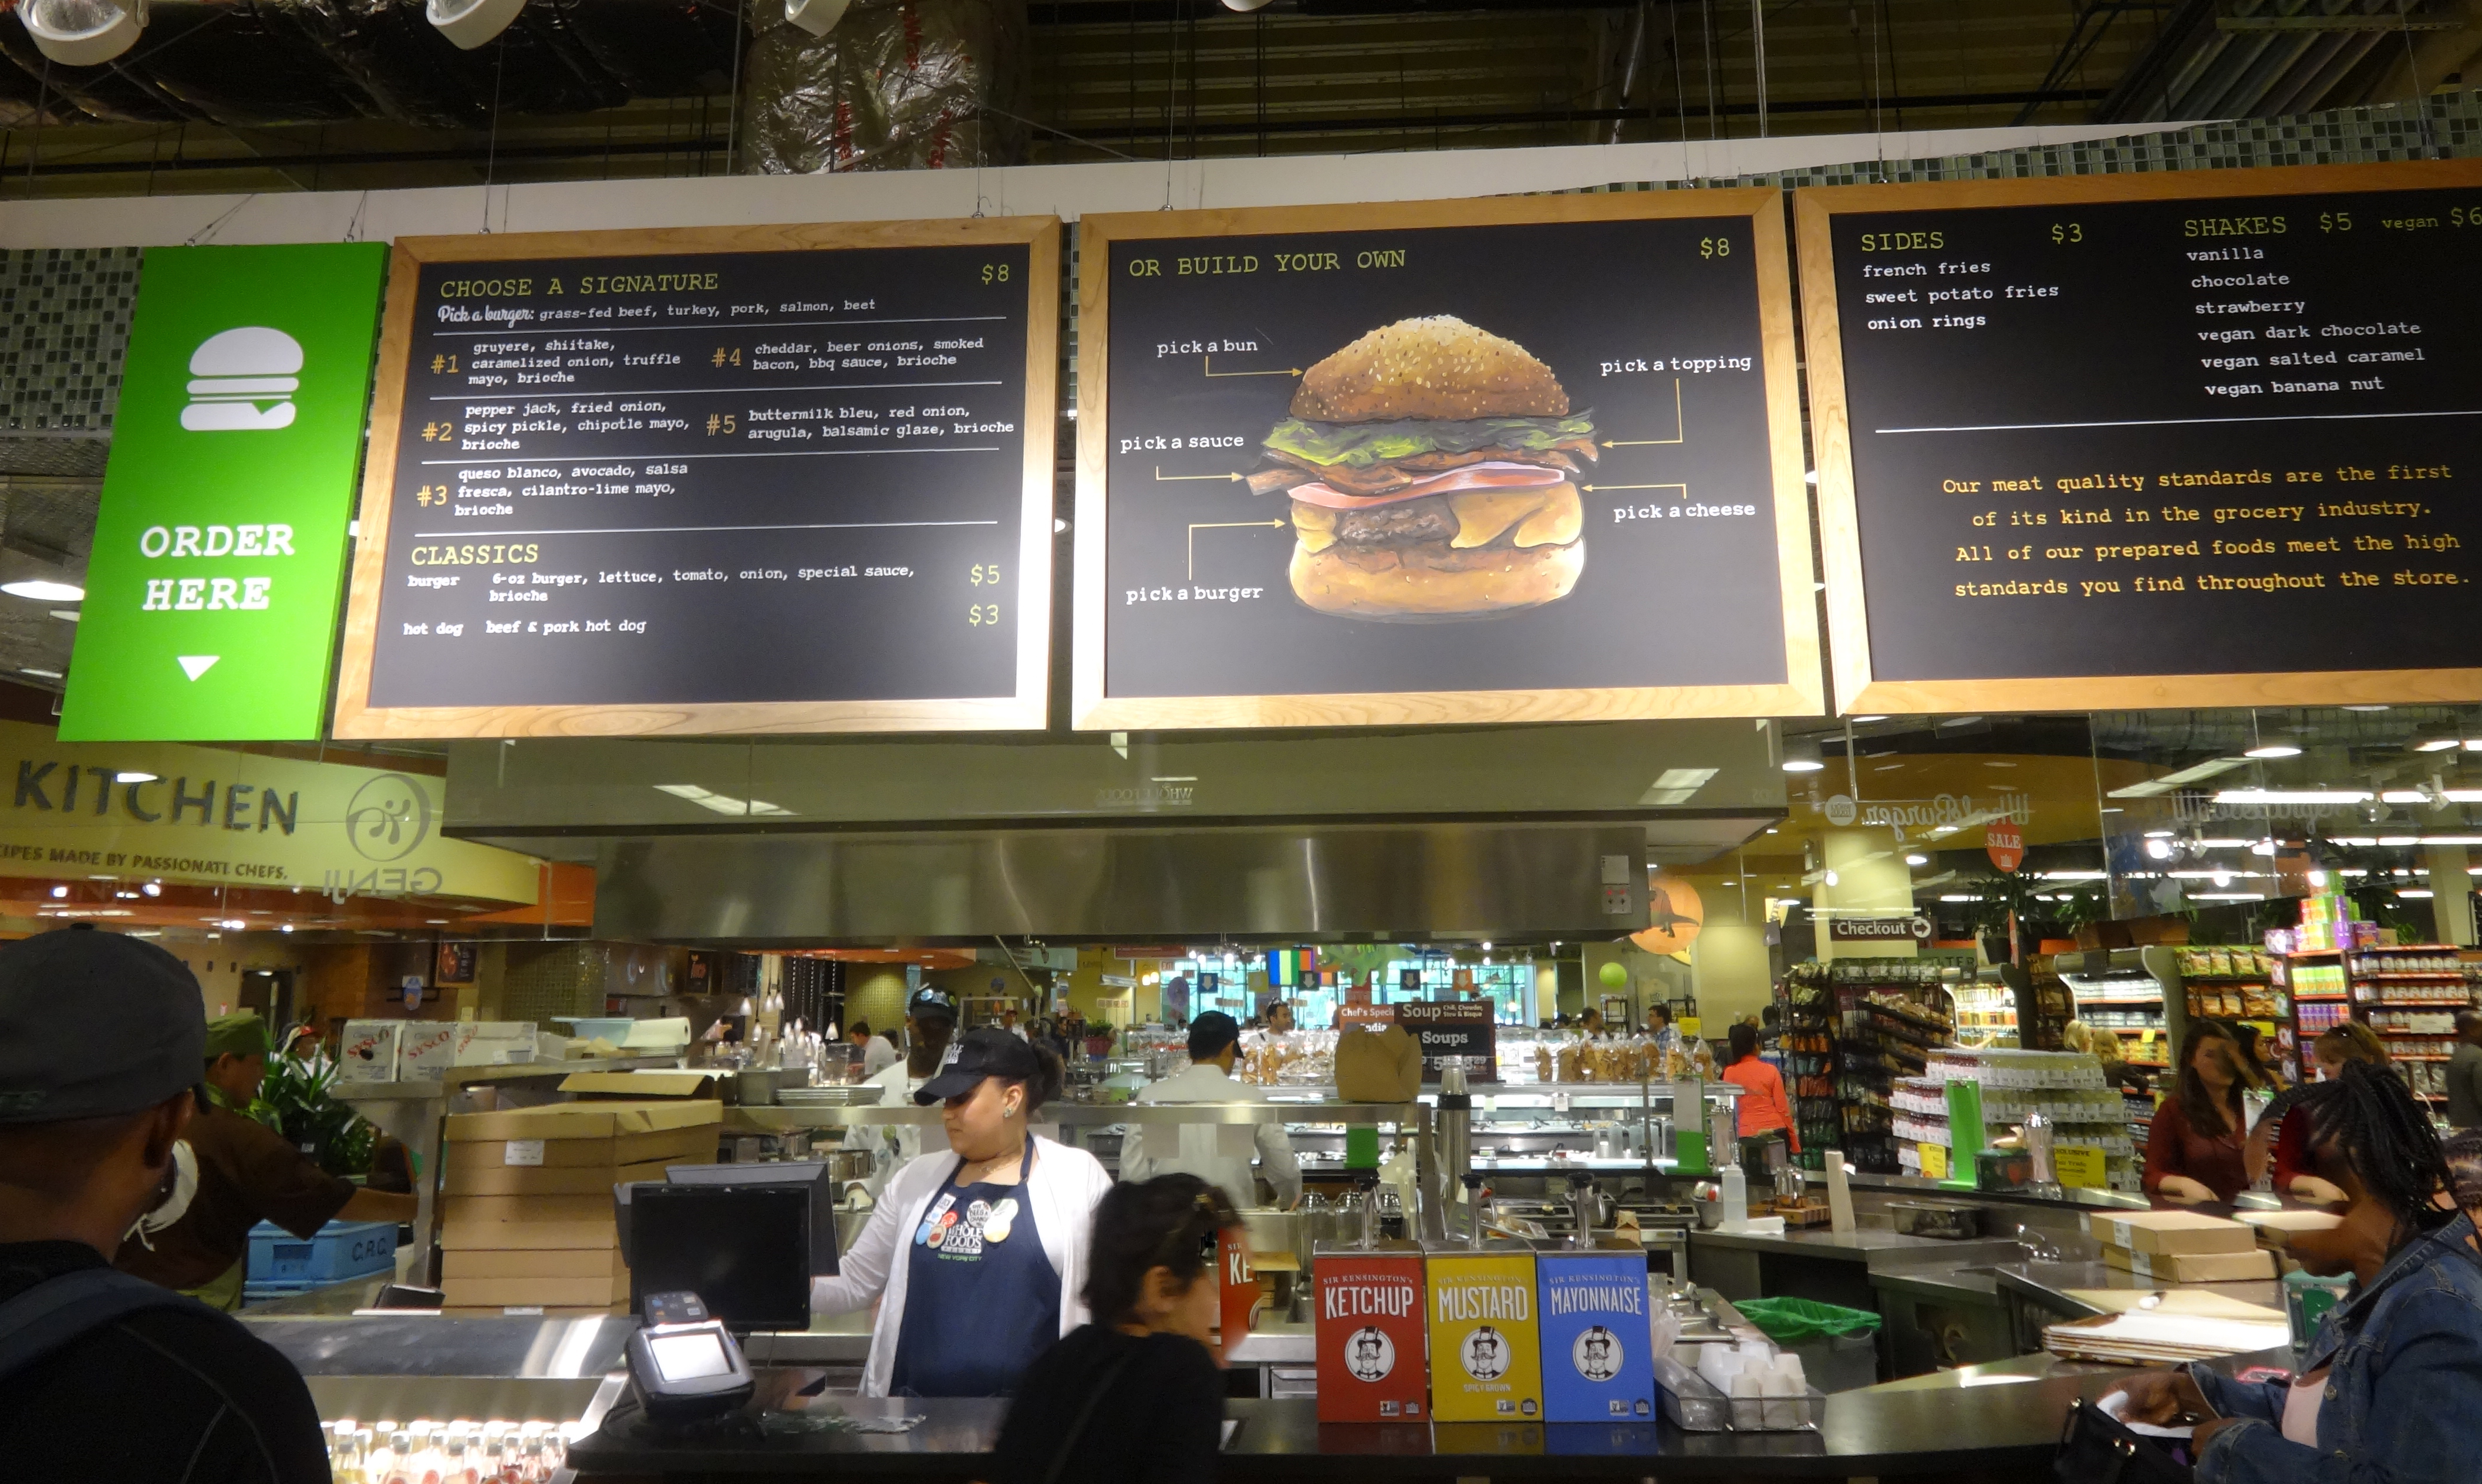 Whole Foods hamburger menu board